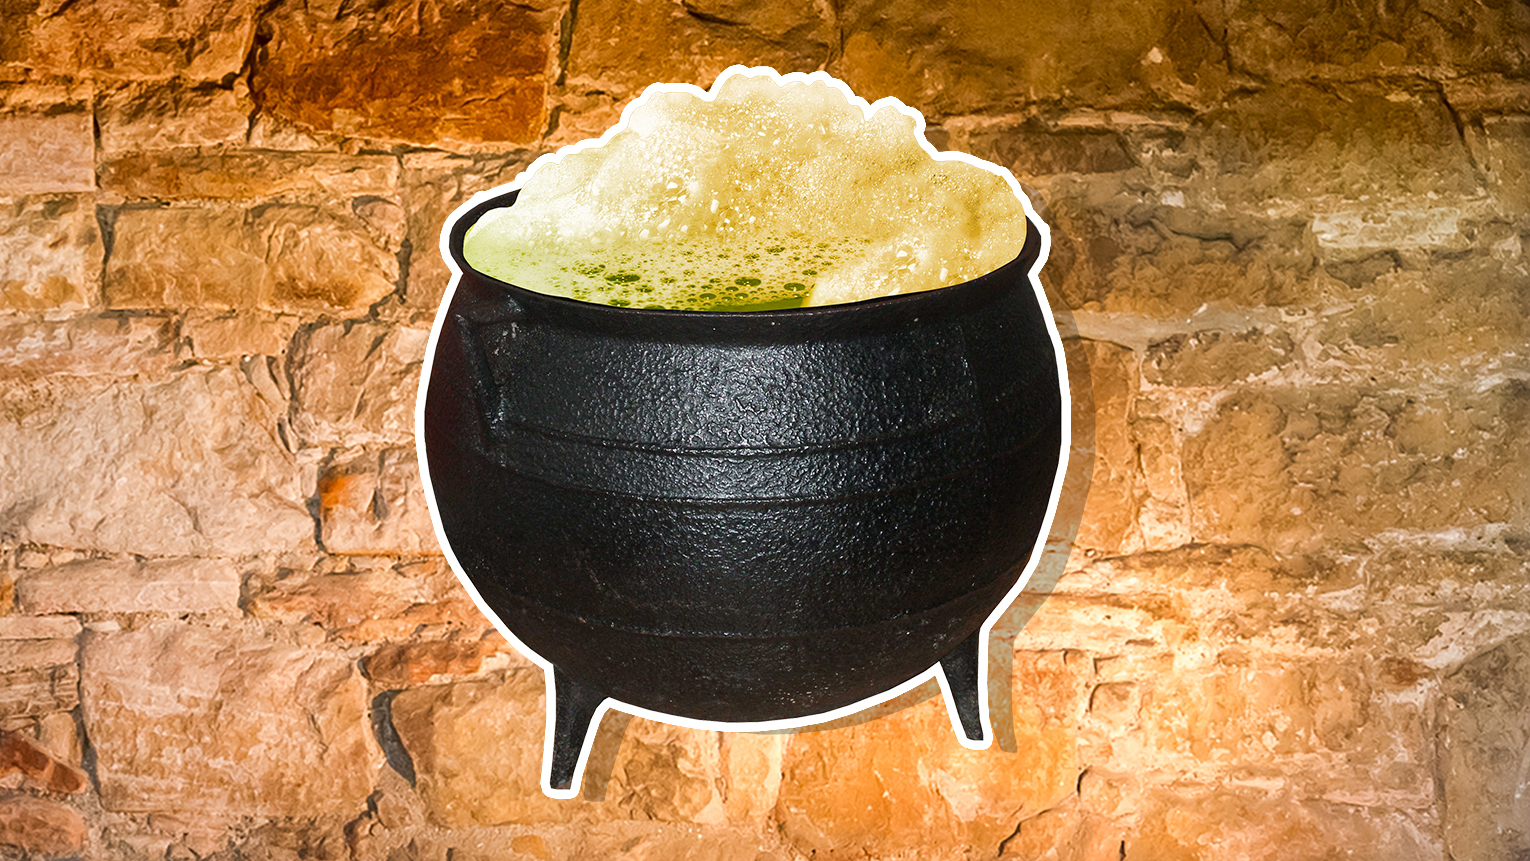 Bubbling cauldron